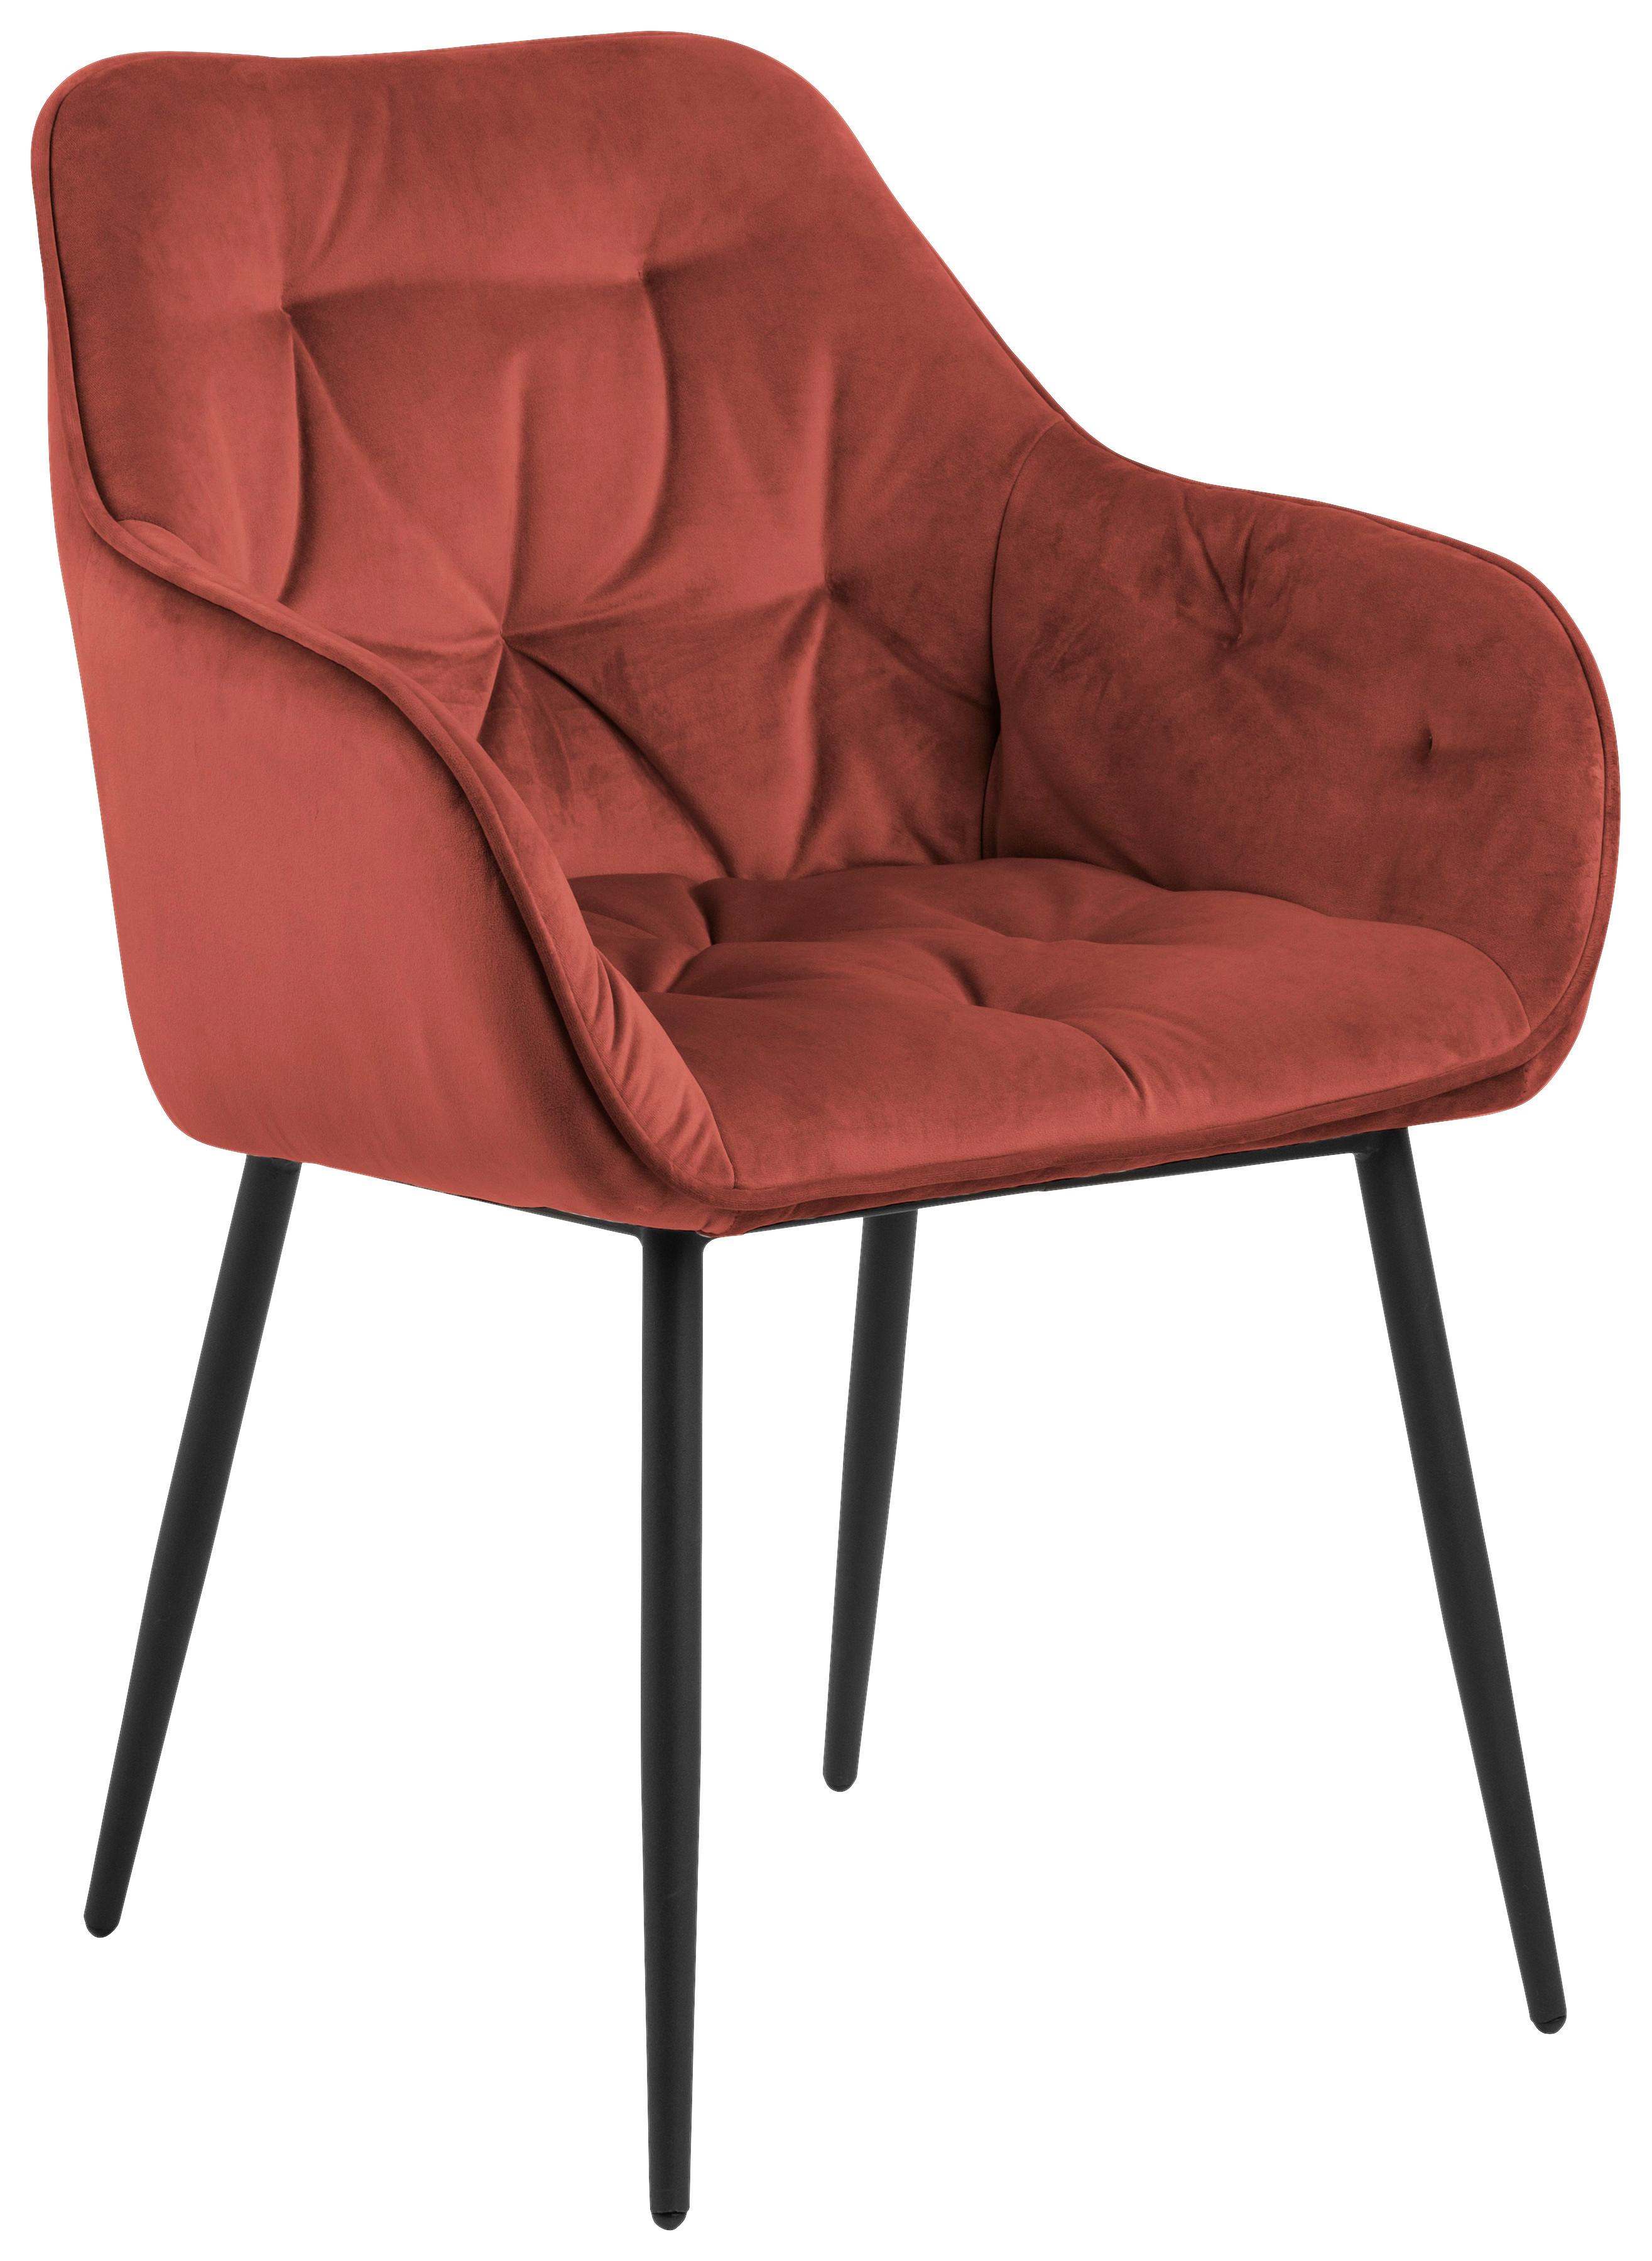 Židle S Podroučkami Brooke Samet - černá/korály, Trend, kov/textil (58/83/55cm) - Livetastic